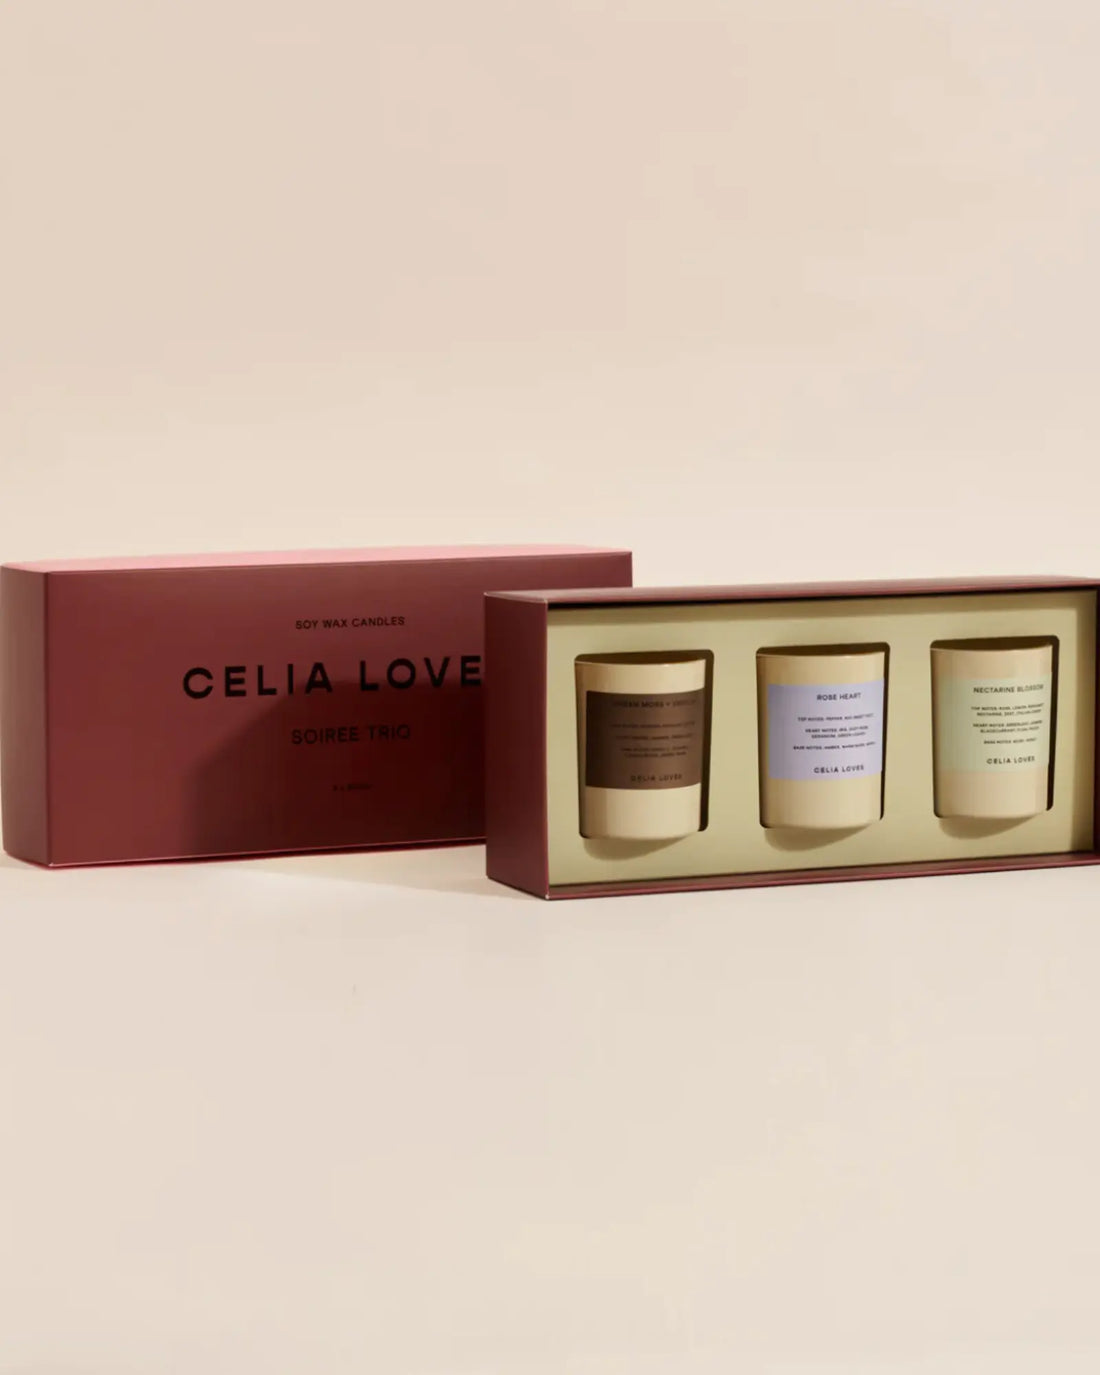 Celia Loves Trio Candle Set - Soiree